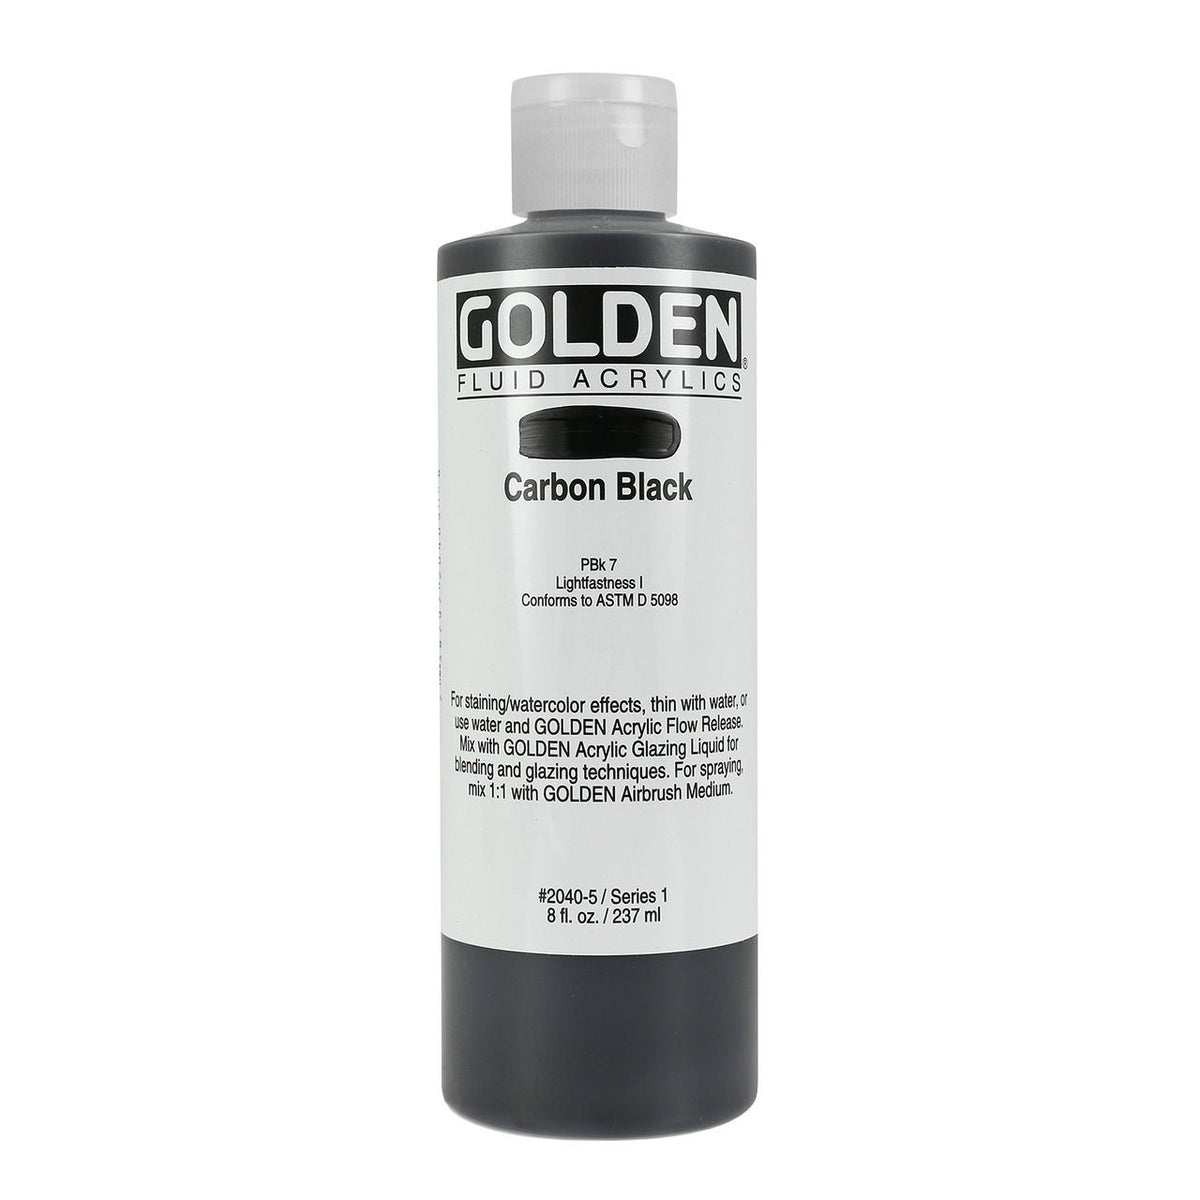 Golden Fluid Acrylic Carbon Black 8 oz - merriartist.com